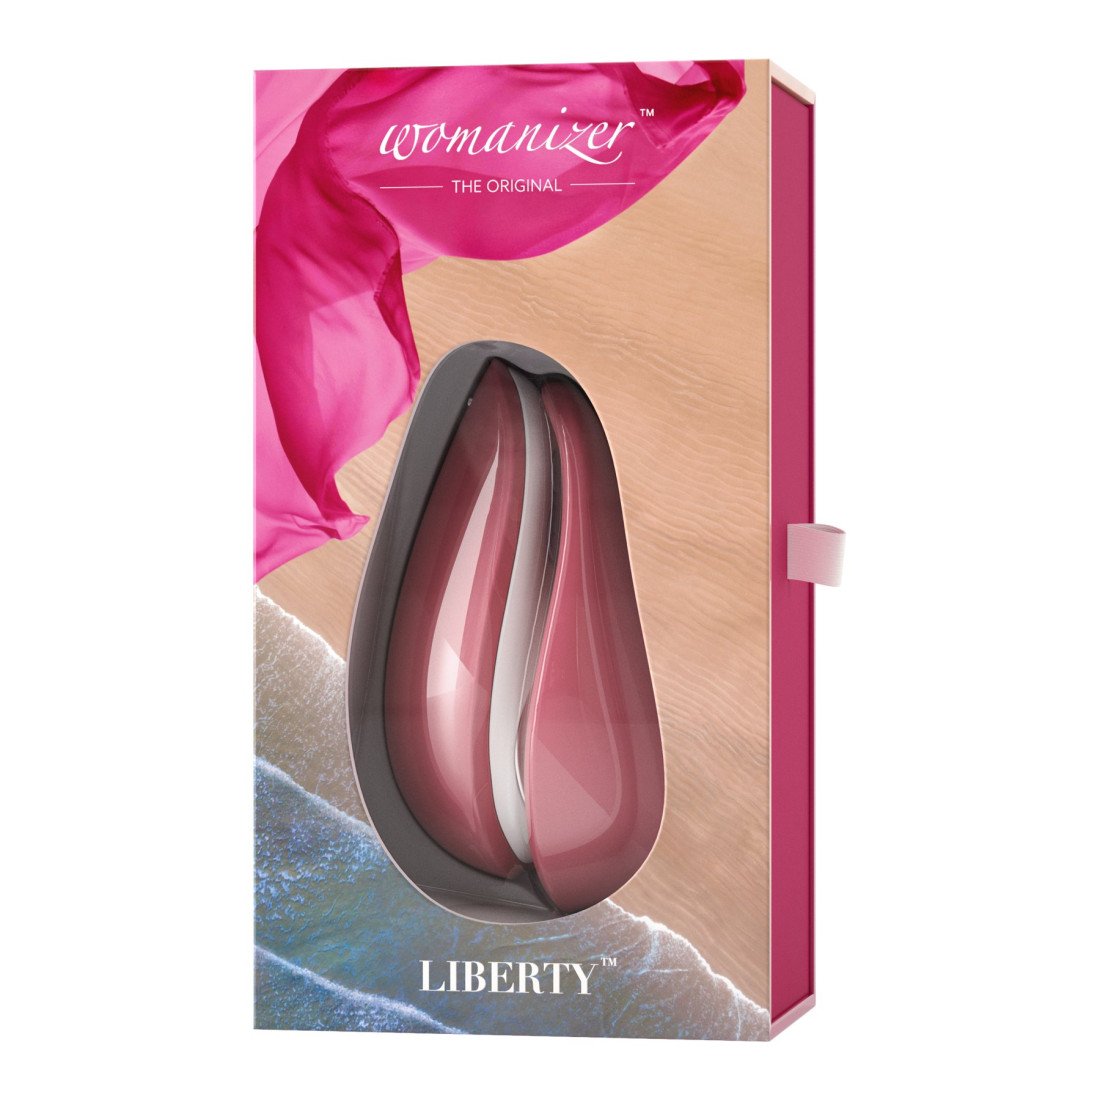 Klitorinis stimuliatorius „Liberty“ - Womanizer